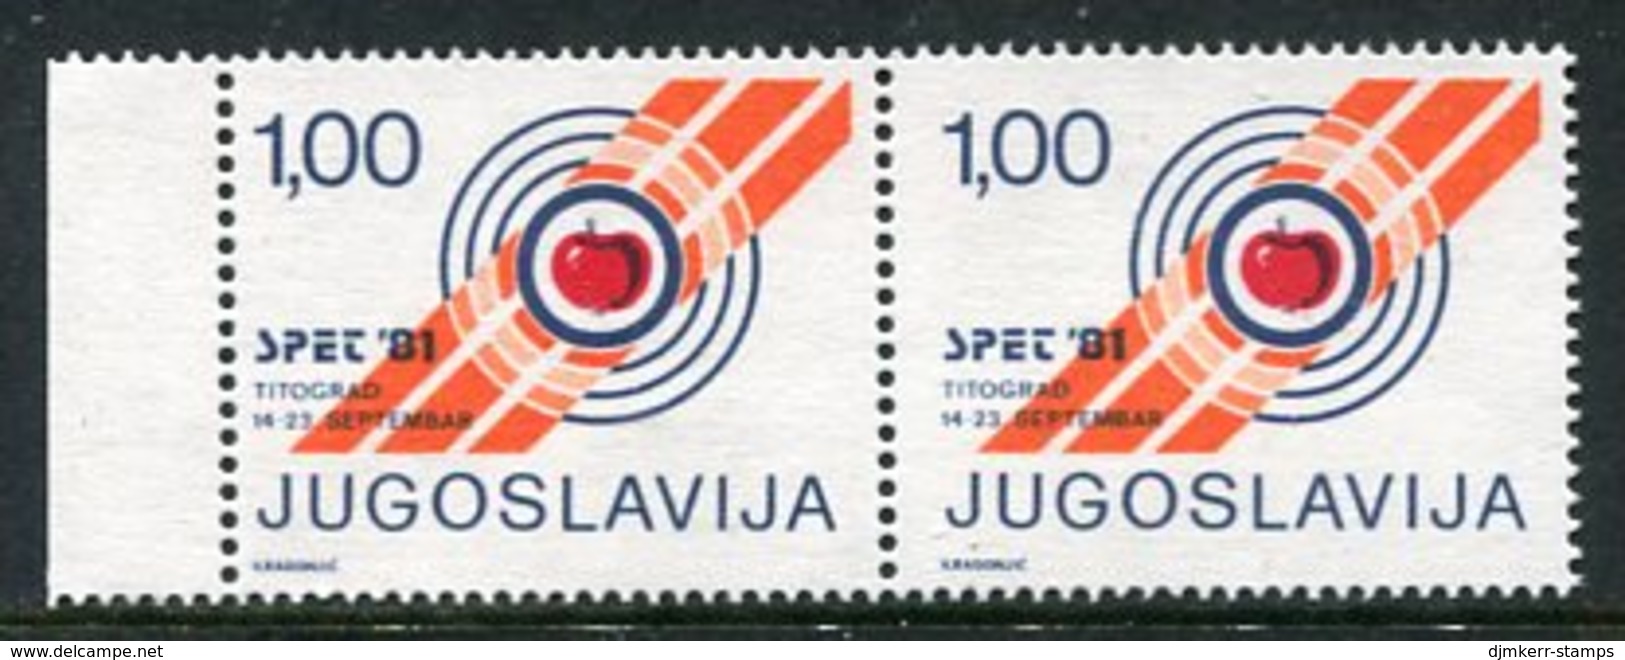 YUGOSLAVIA 1981 SPET '81 European Shooting Championship Tax Stamp, Marginal Pair With Variety MNH / ** - Beneficenza